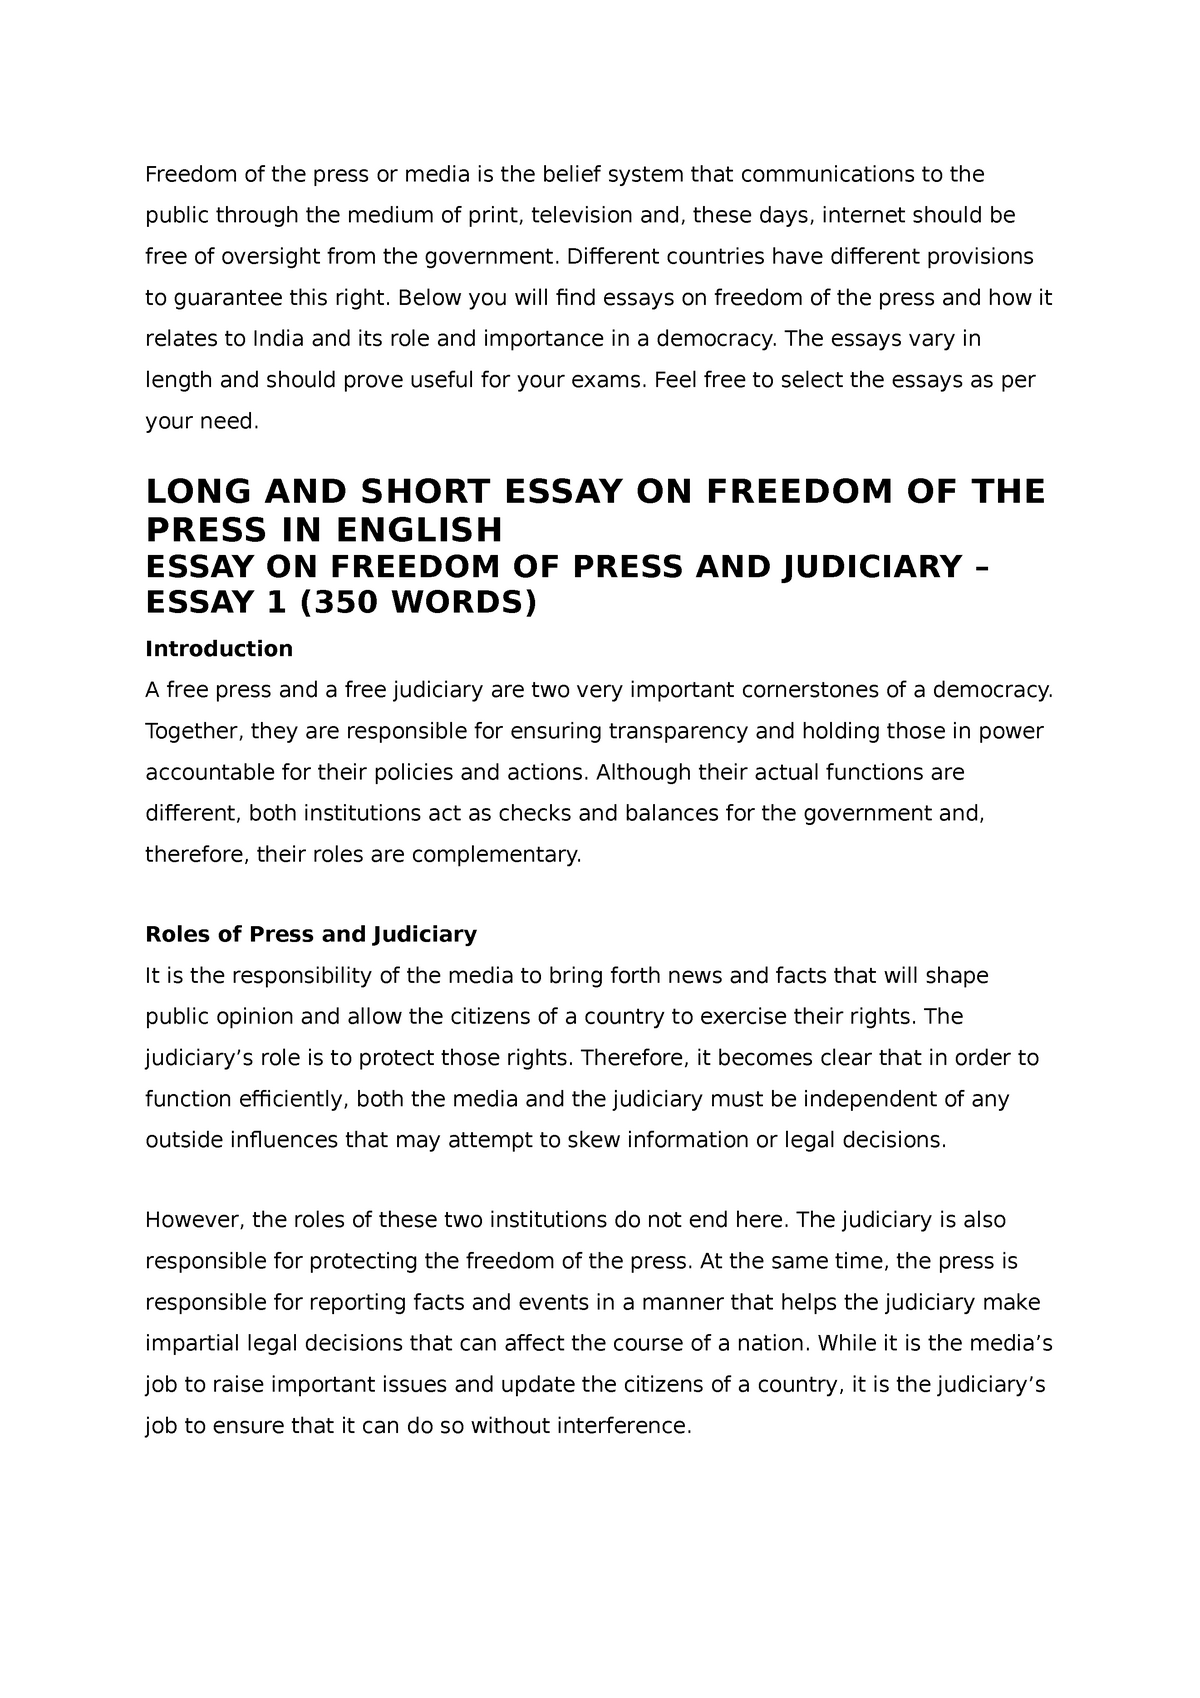 freedom of media essay tagalog